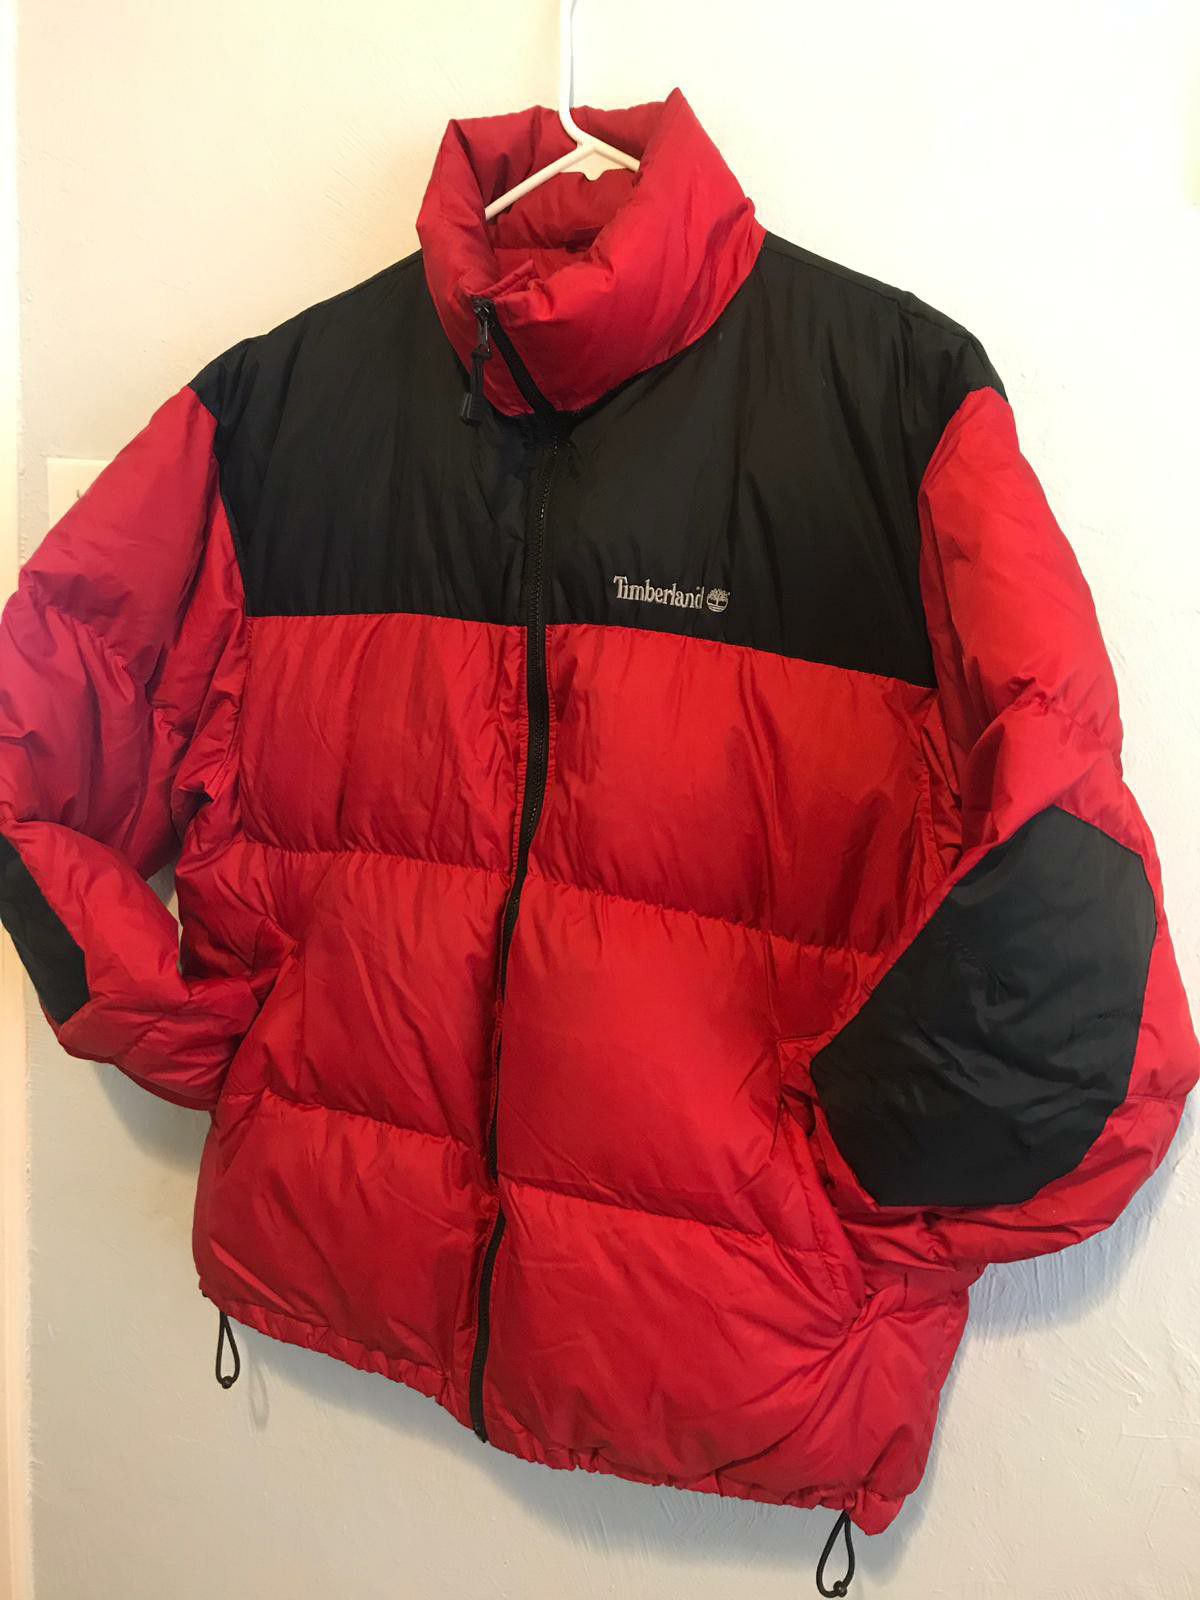 XL* Timberland puffer jacket